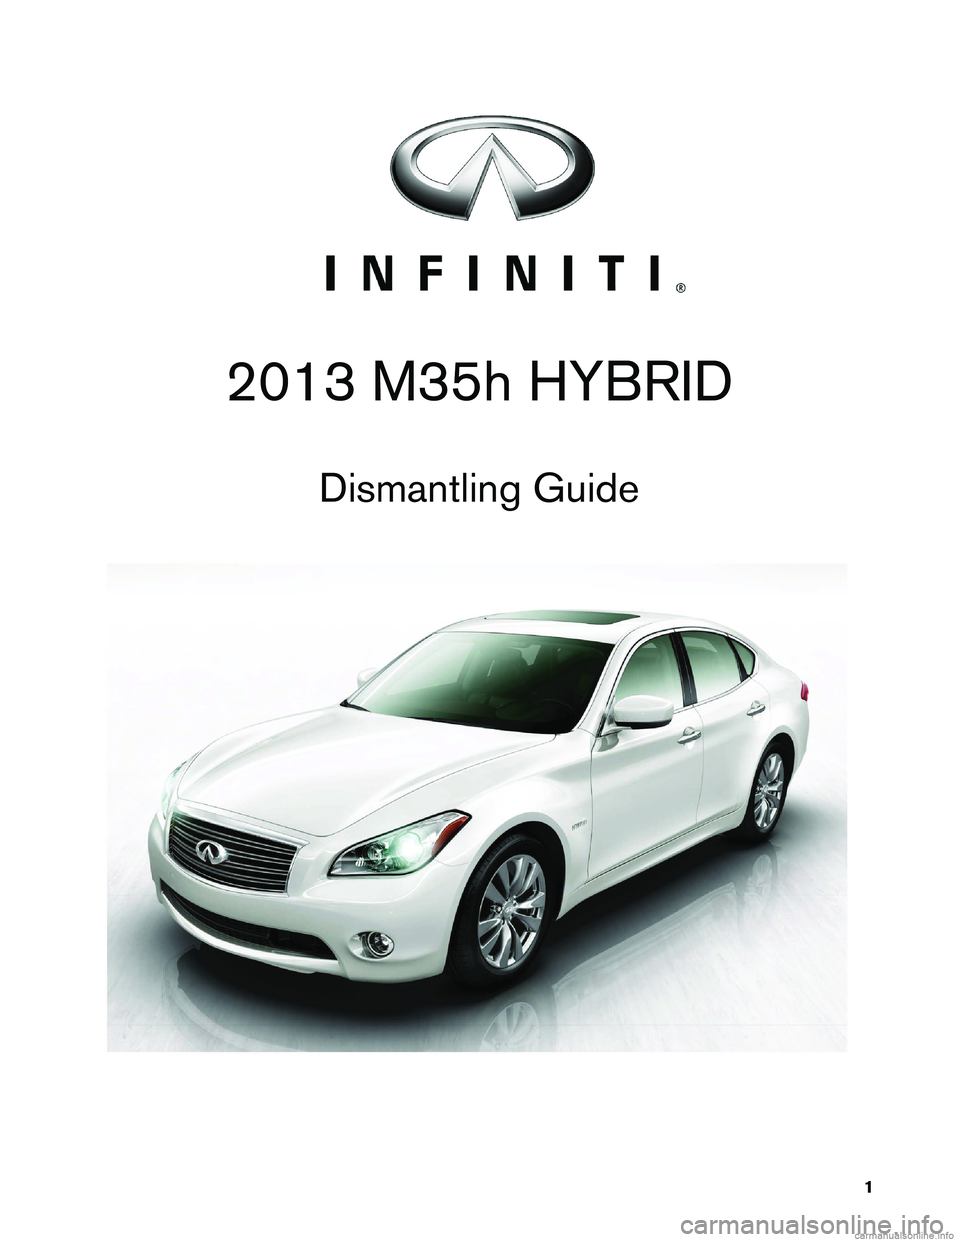 INFINITI M HYBRID 2013  Dismantling Guide 2013 M35h HYBRID
Dismantling Guide 1   